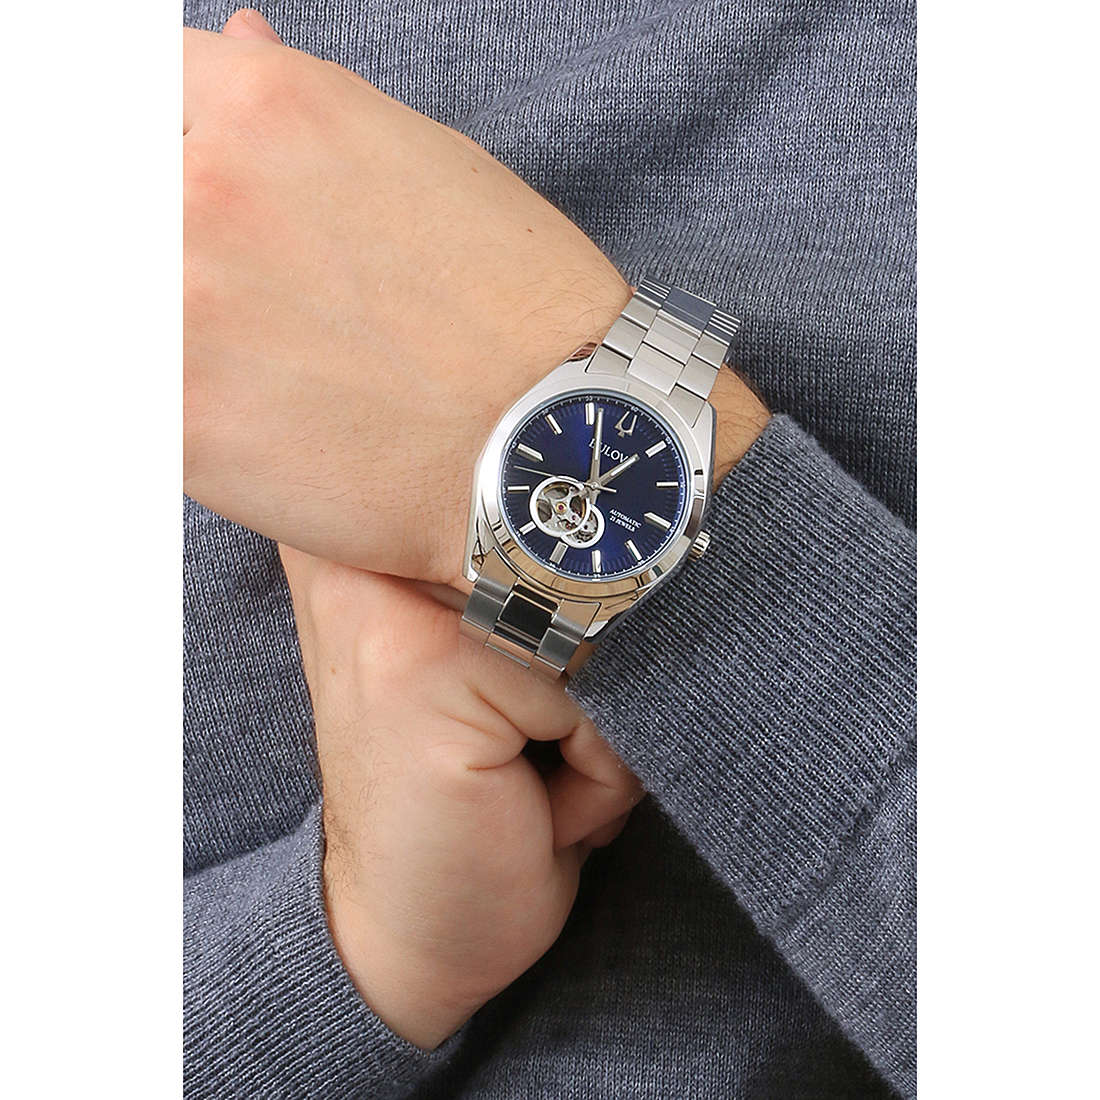 New Bulova Men's Automatic Watch